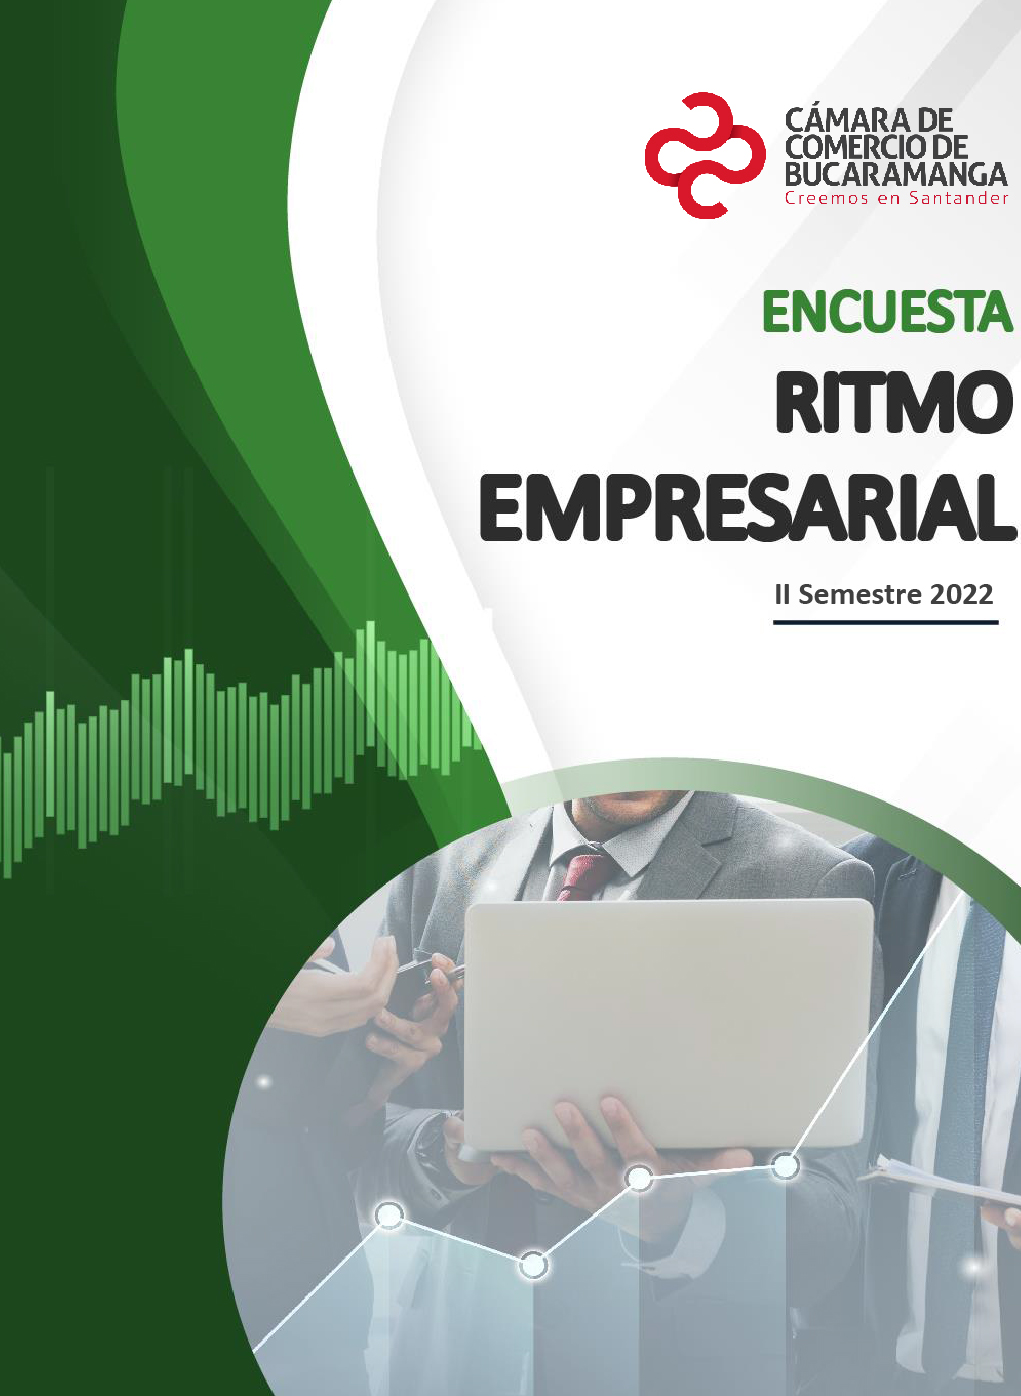 Encuesta Ritmo Empresarial Santander 2022 - II semestre